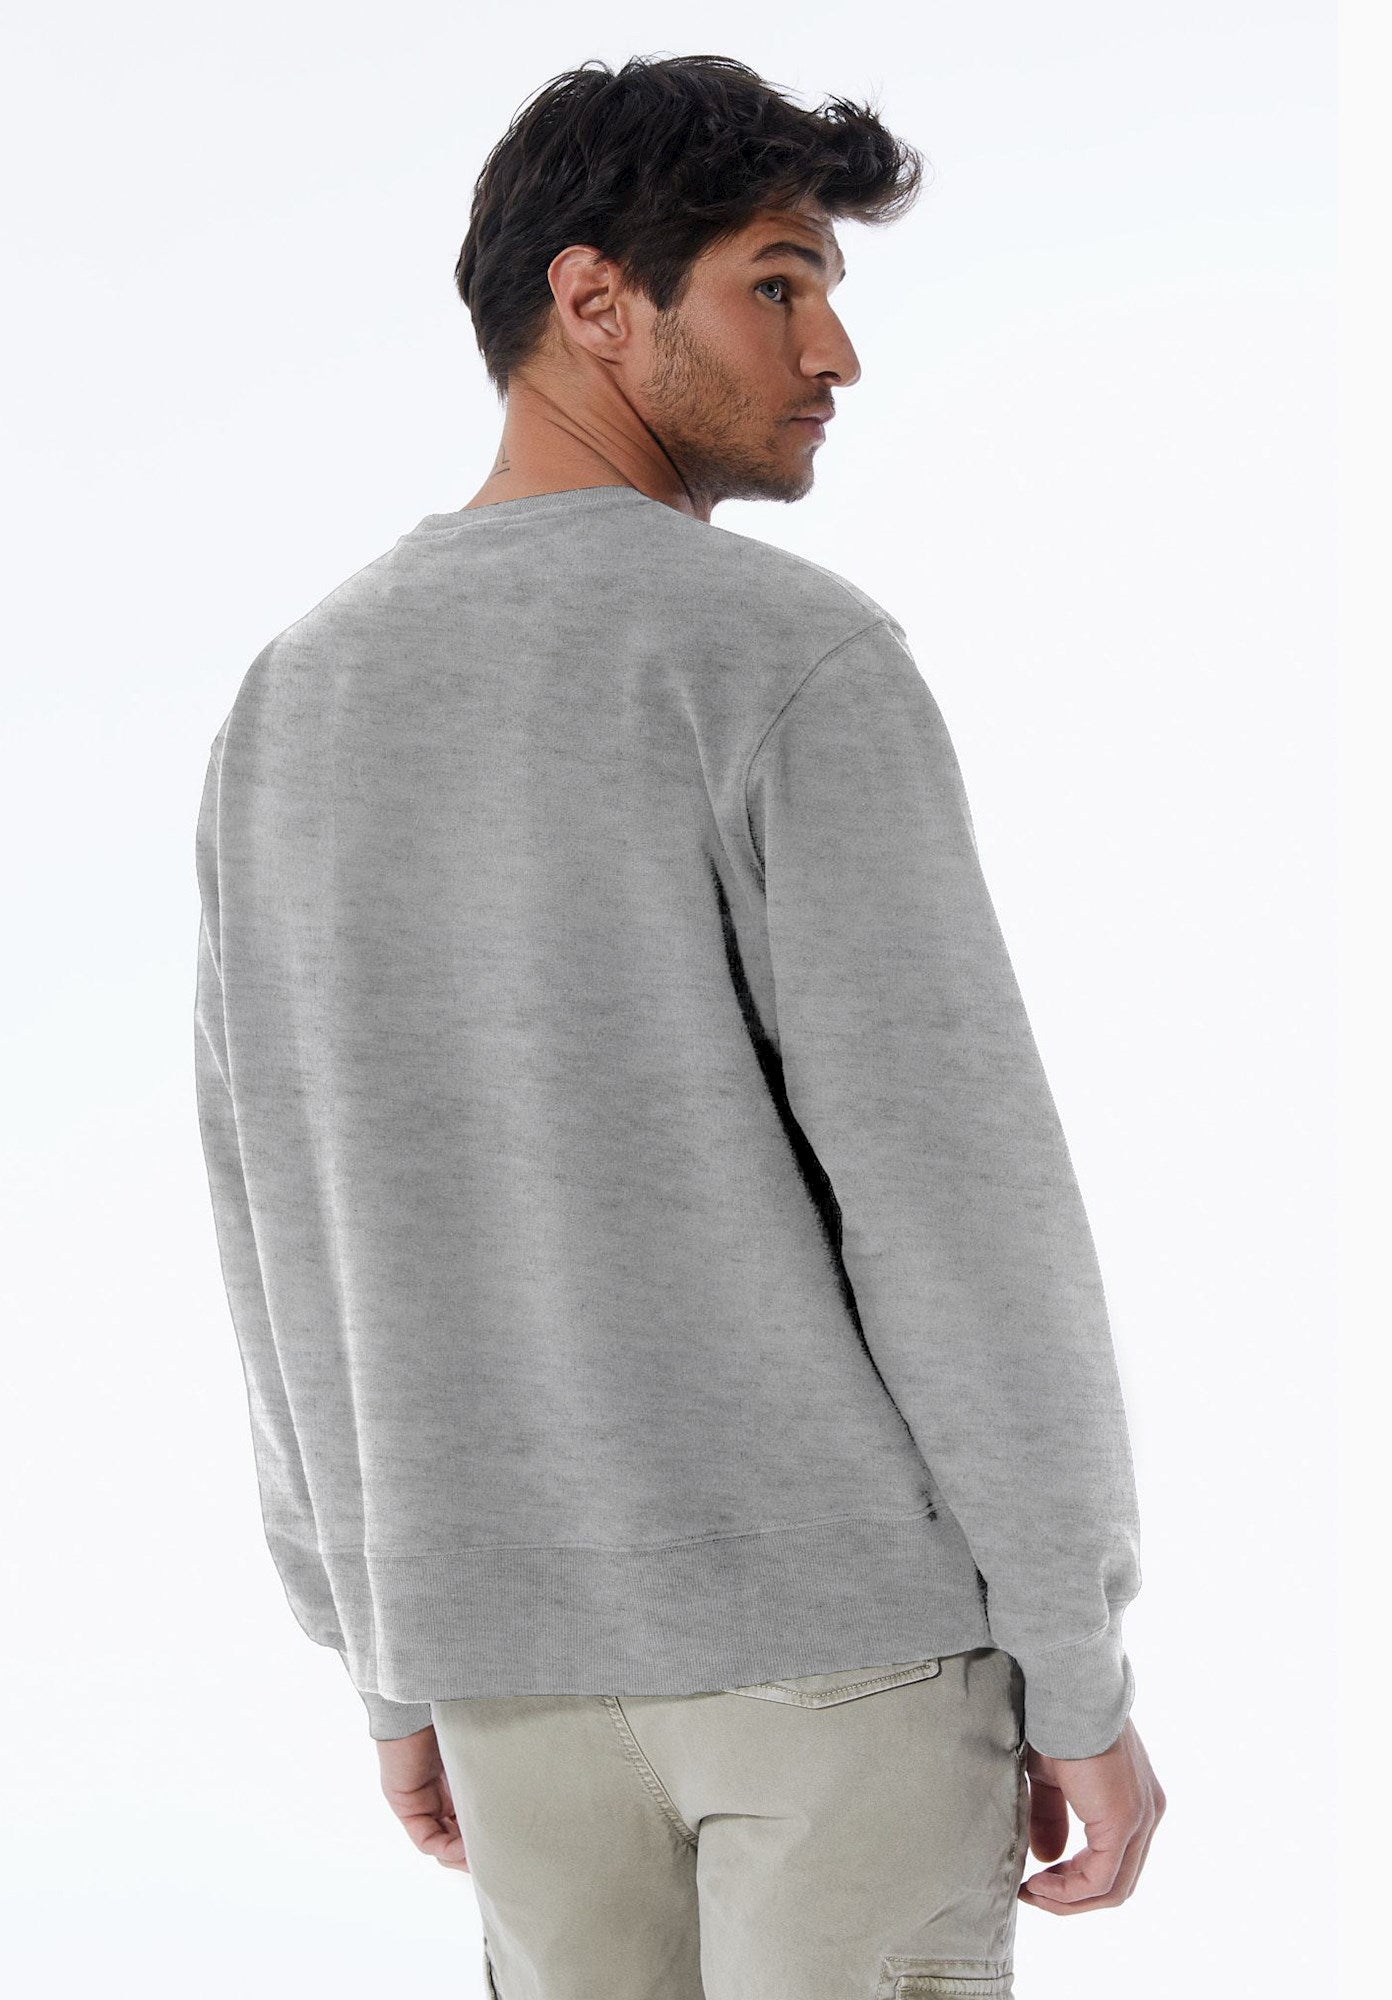 Tom - Crew Neck Long Sleeve Sweatshirt - Grey Melange